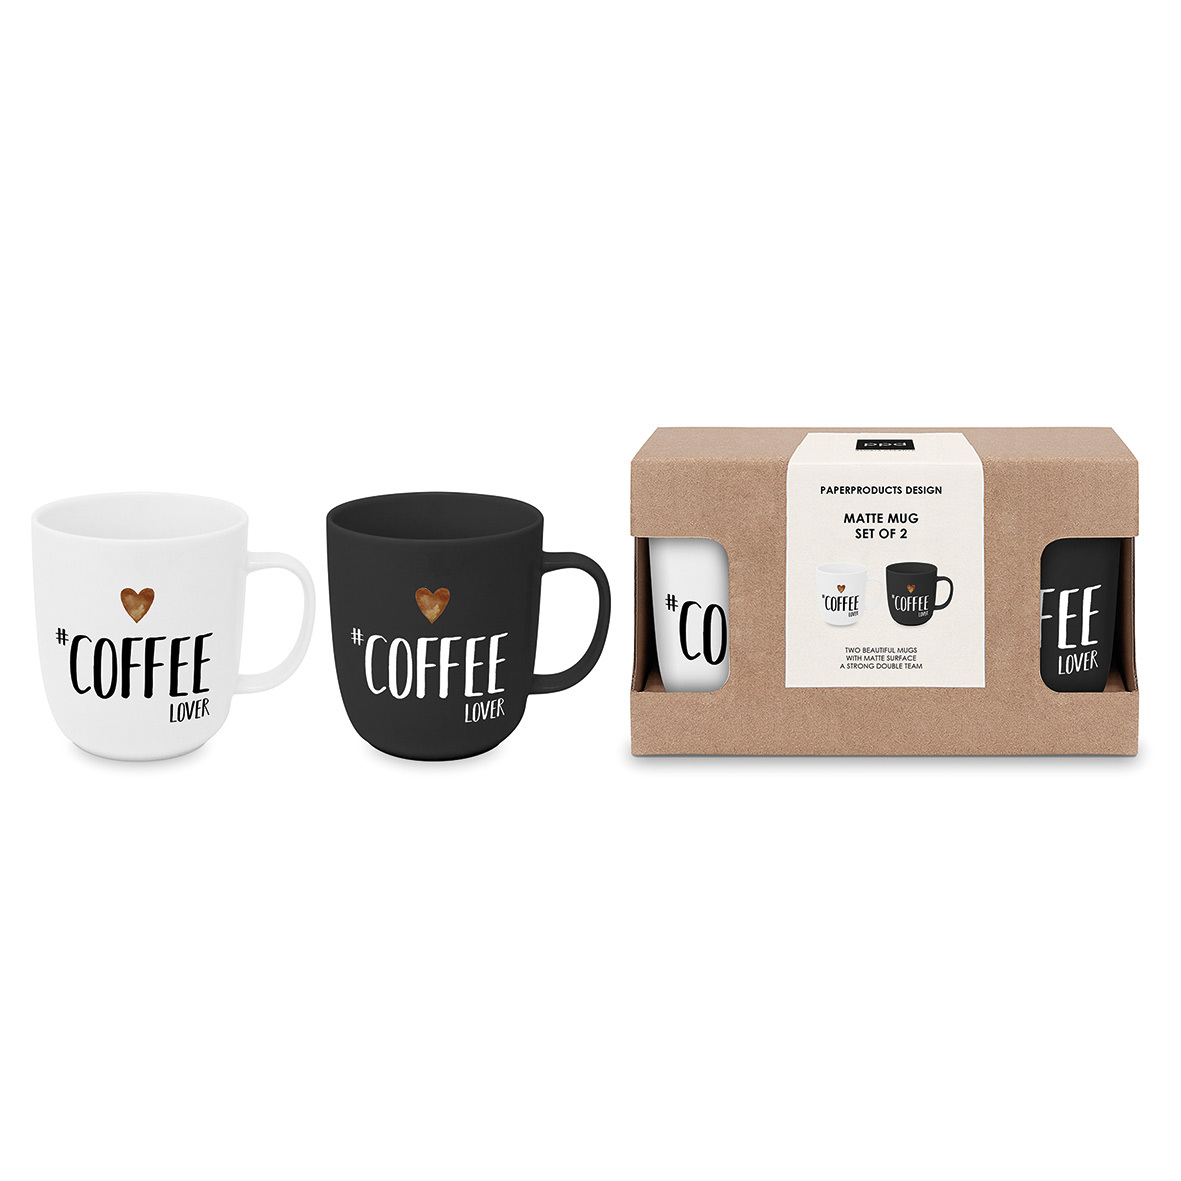 Coffee Lover x 2 Matte Mug Set 2